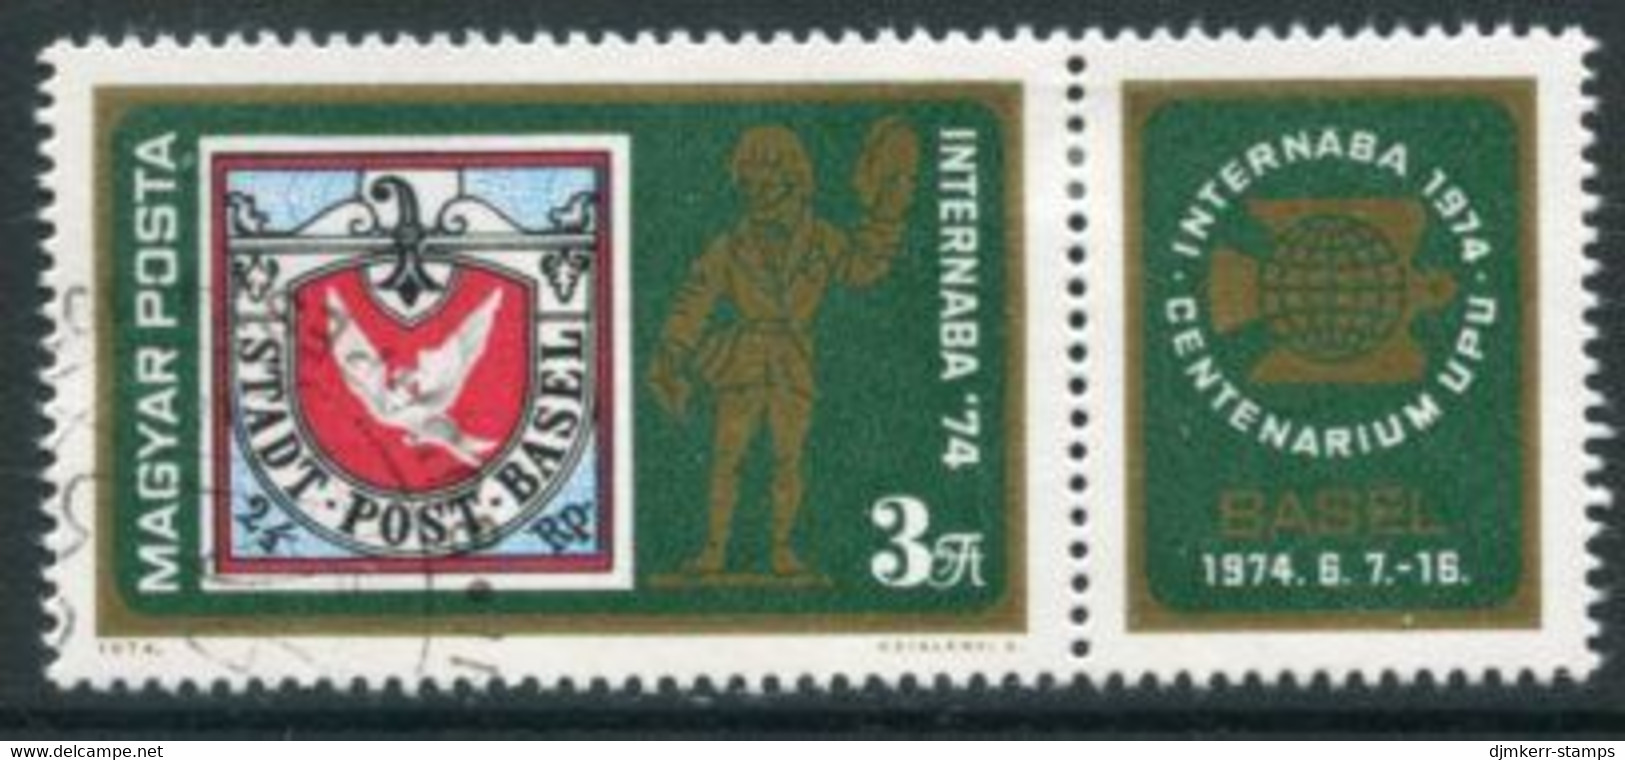 HUNGARY 1974 INTERNABA Stamp Exhibition Used.  Michel 2956 - Usado